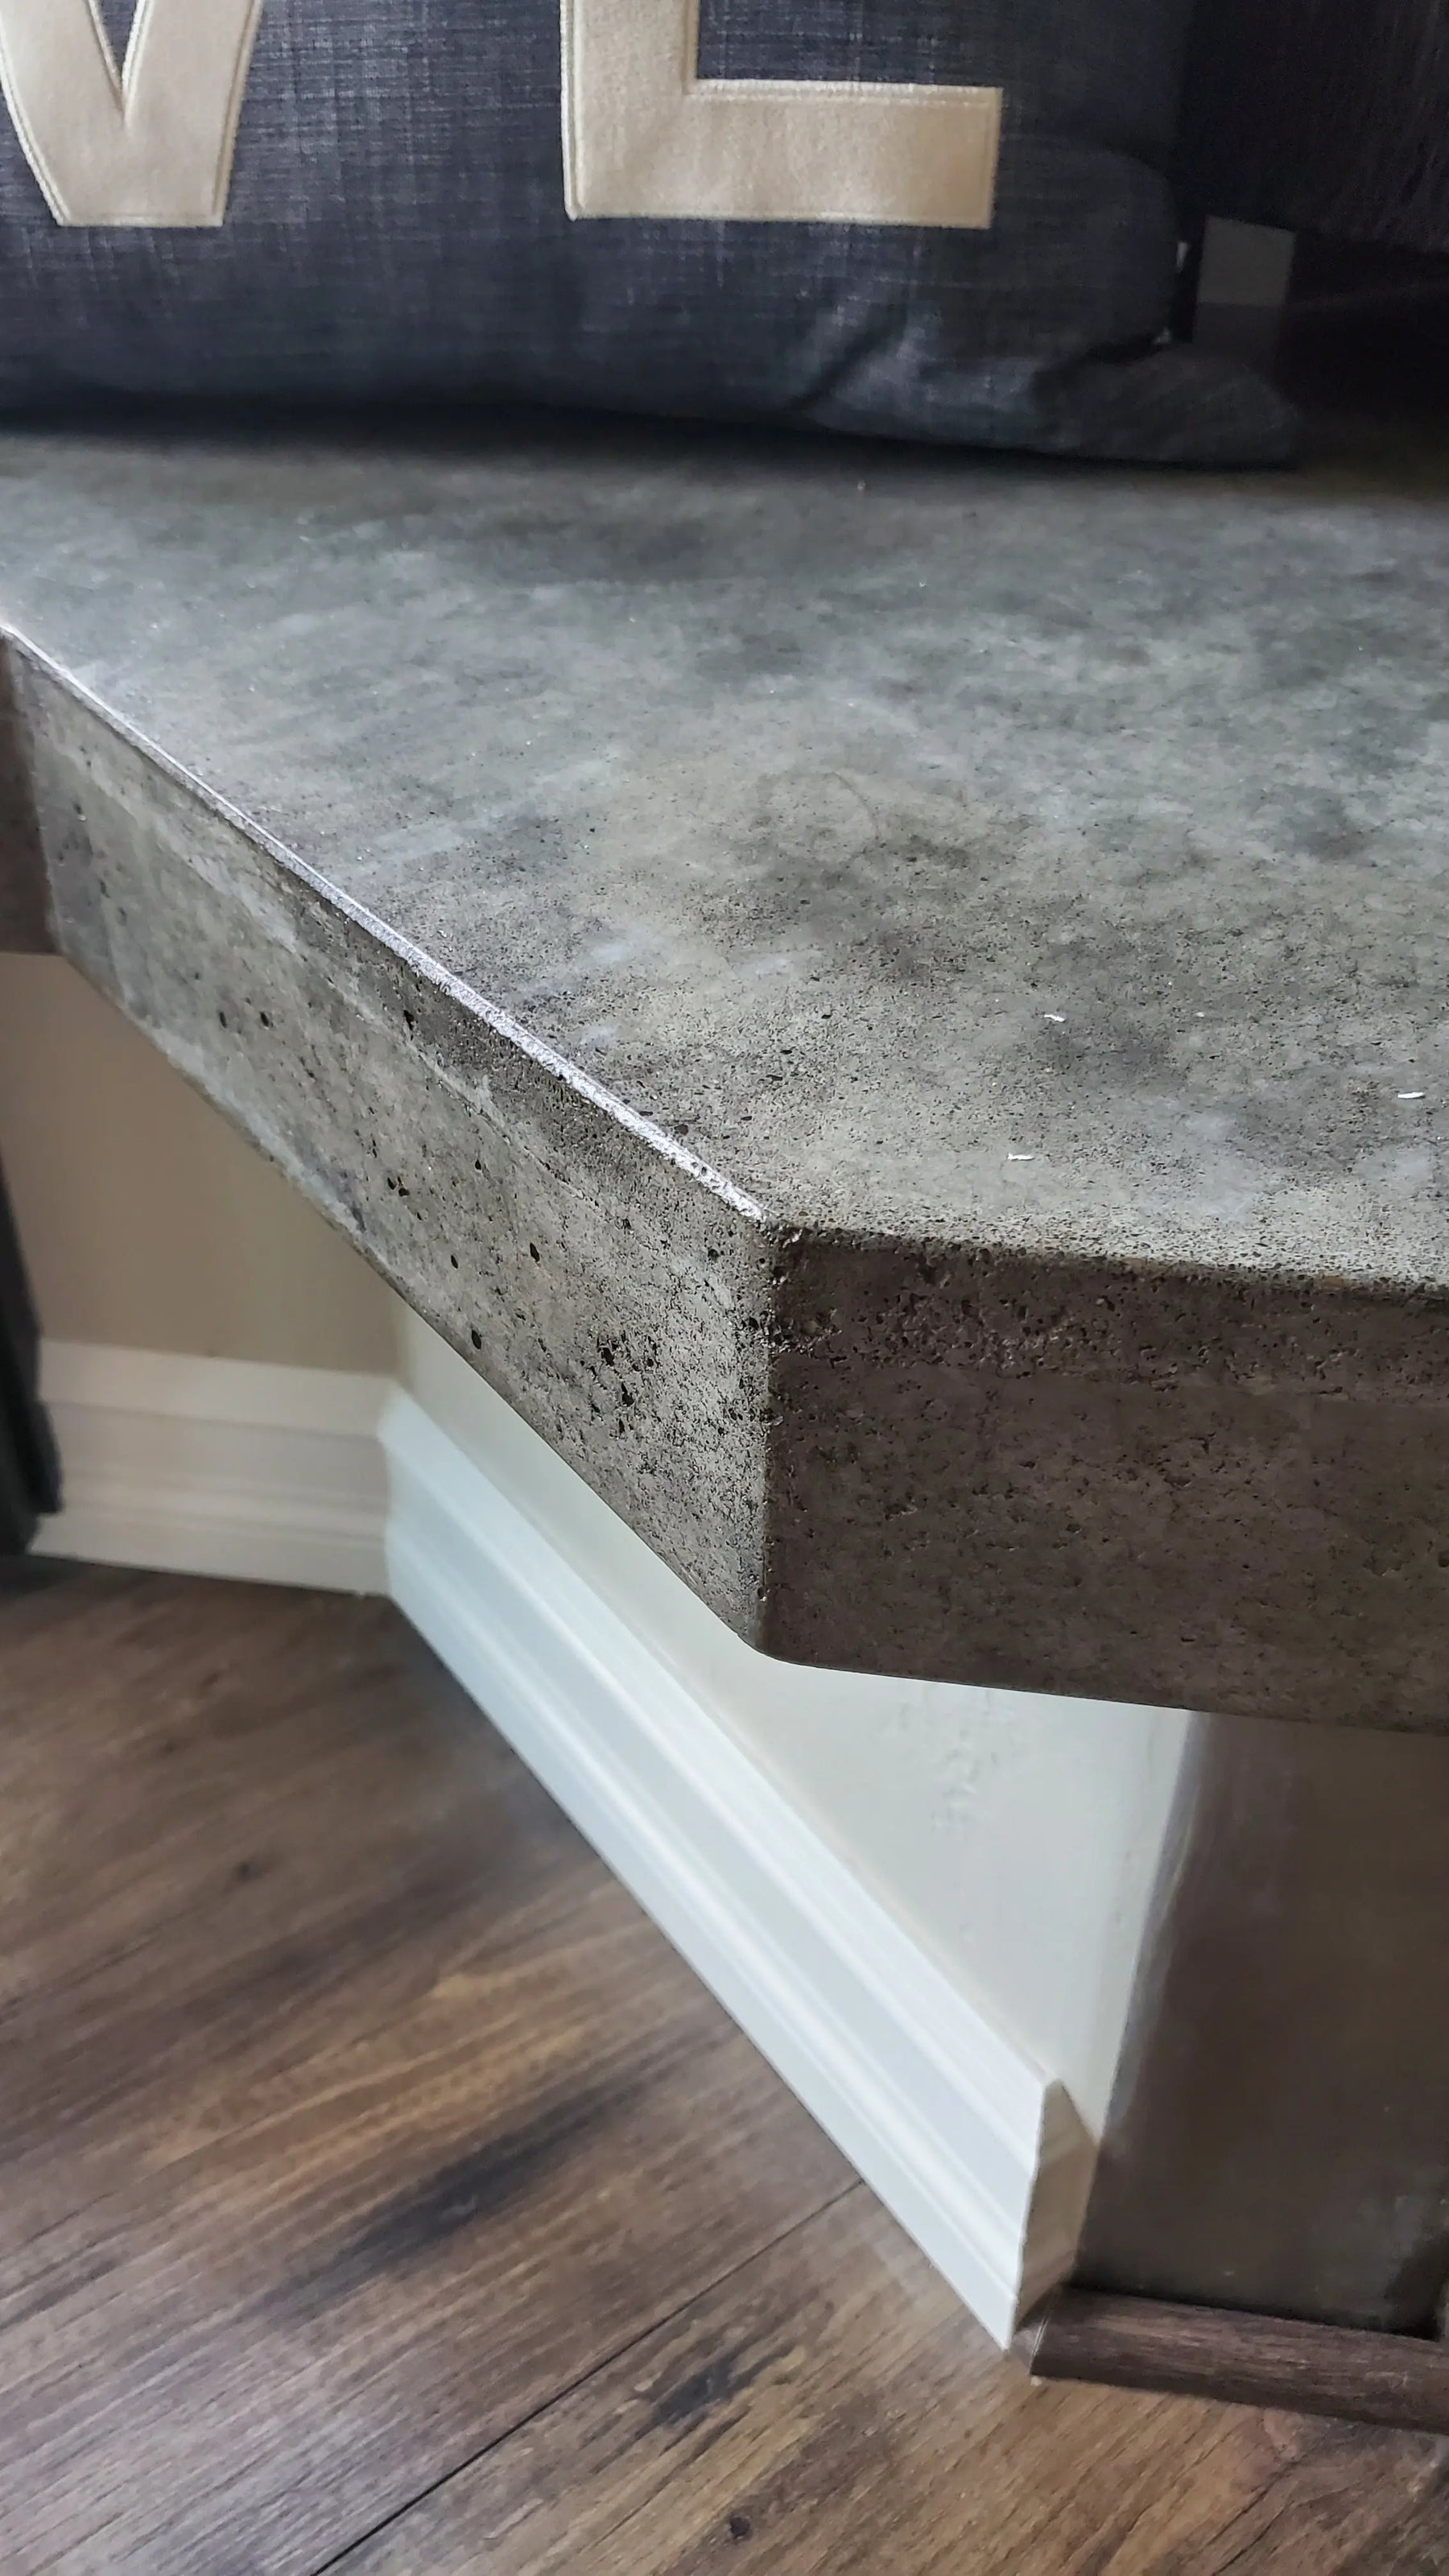 Concrete Countertop Forms - 3.5" Flat Square Commercial Bar Z-Form